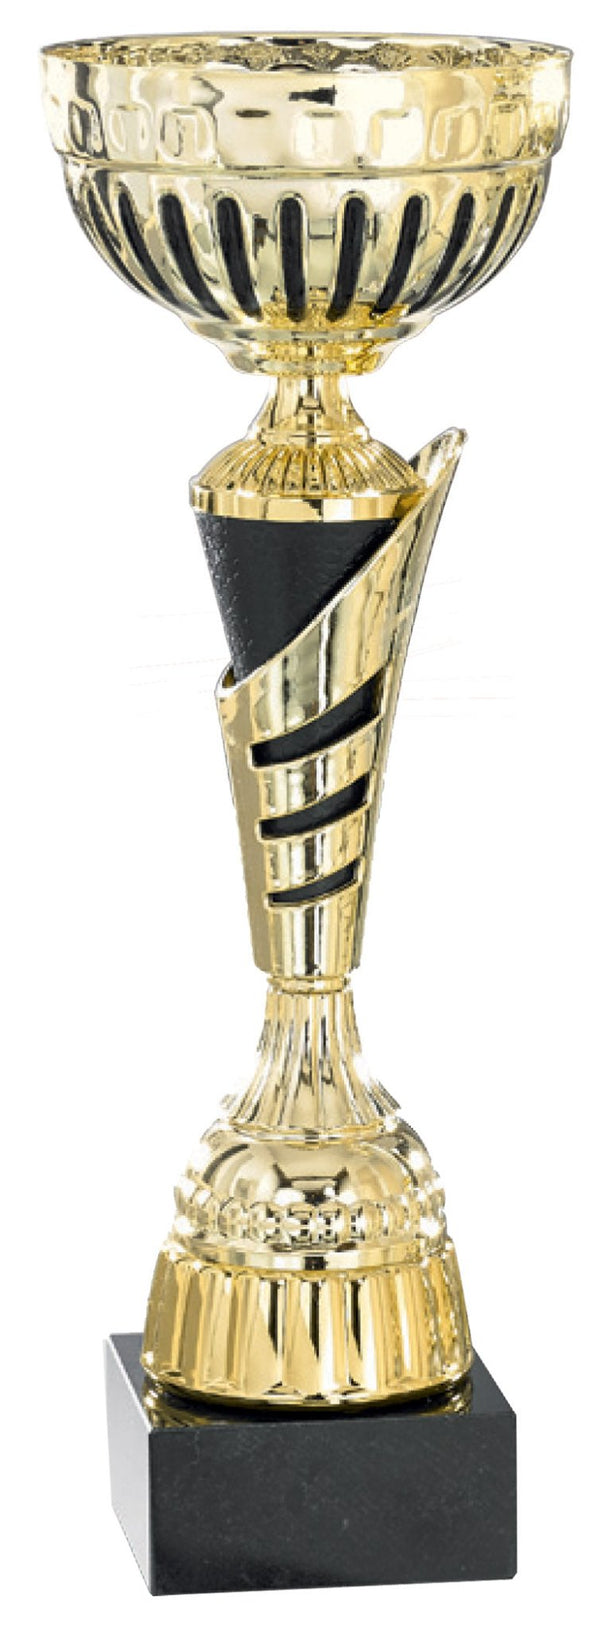 AMC337 Series Trophy Cup - AndersonTrophy.com